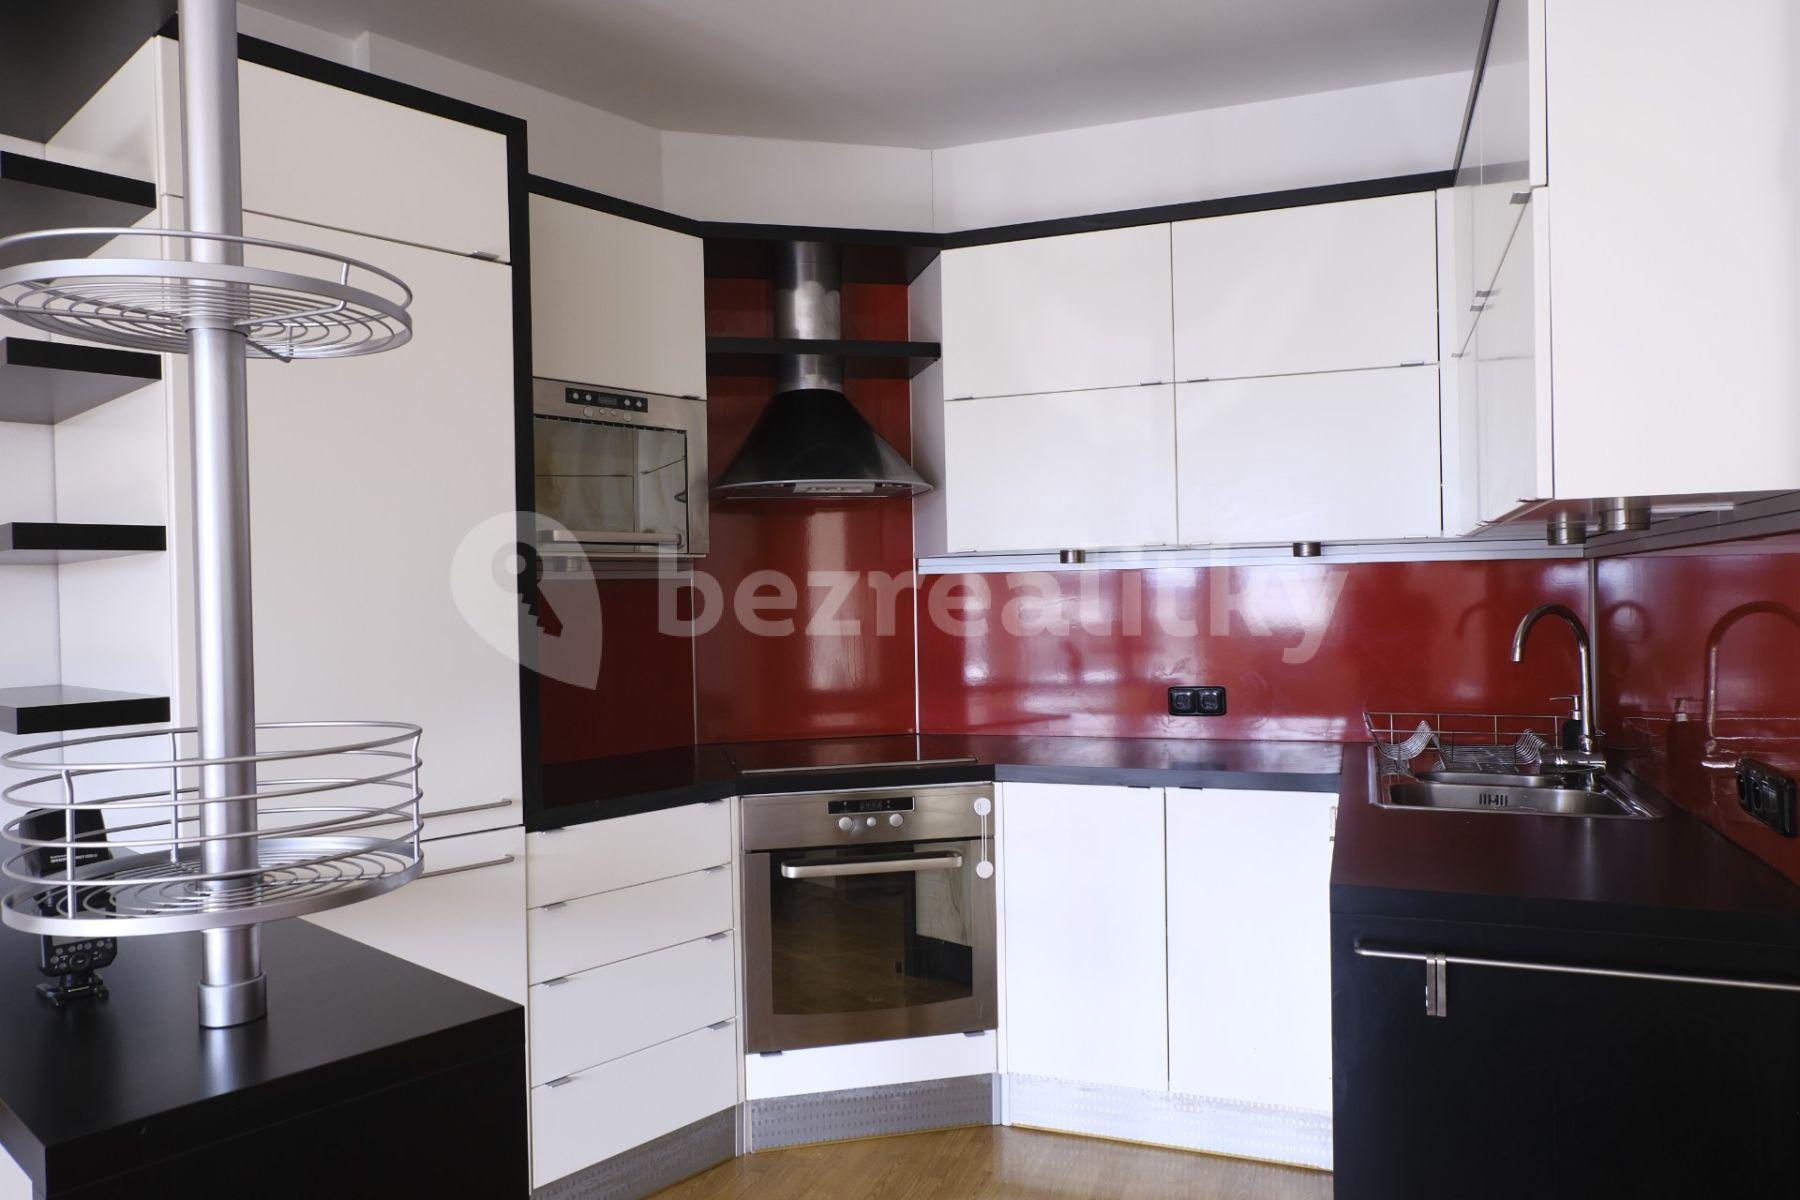 1 bedroom with open-plan kitchen flat to rent, 59 m², Symfonická, Prague, Prague